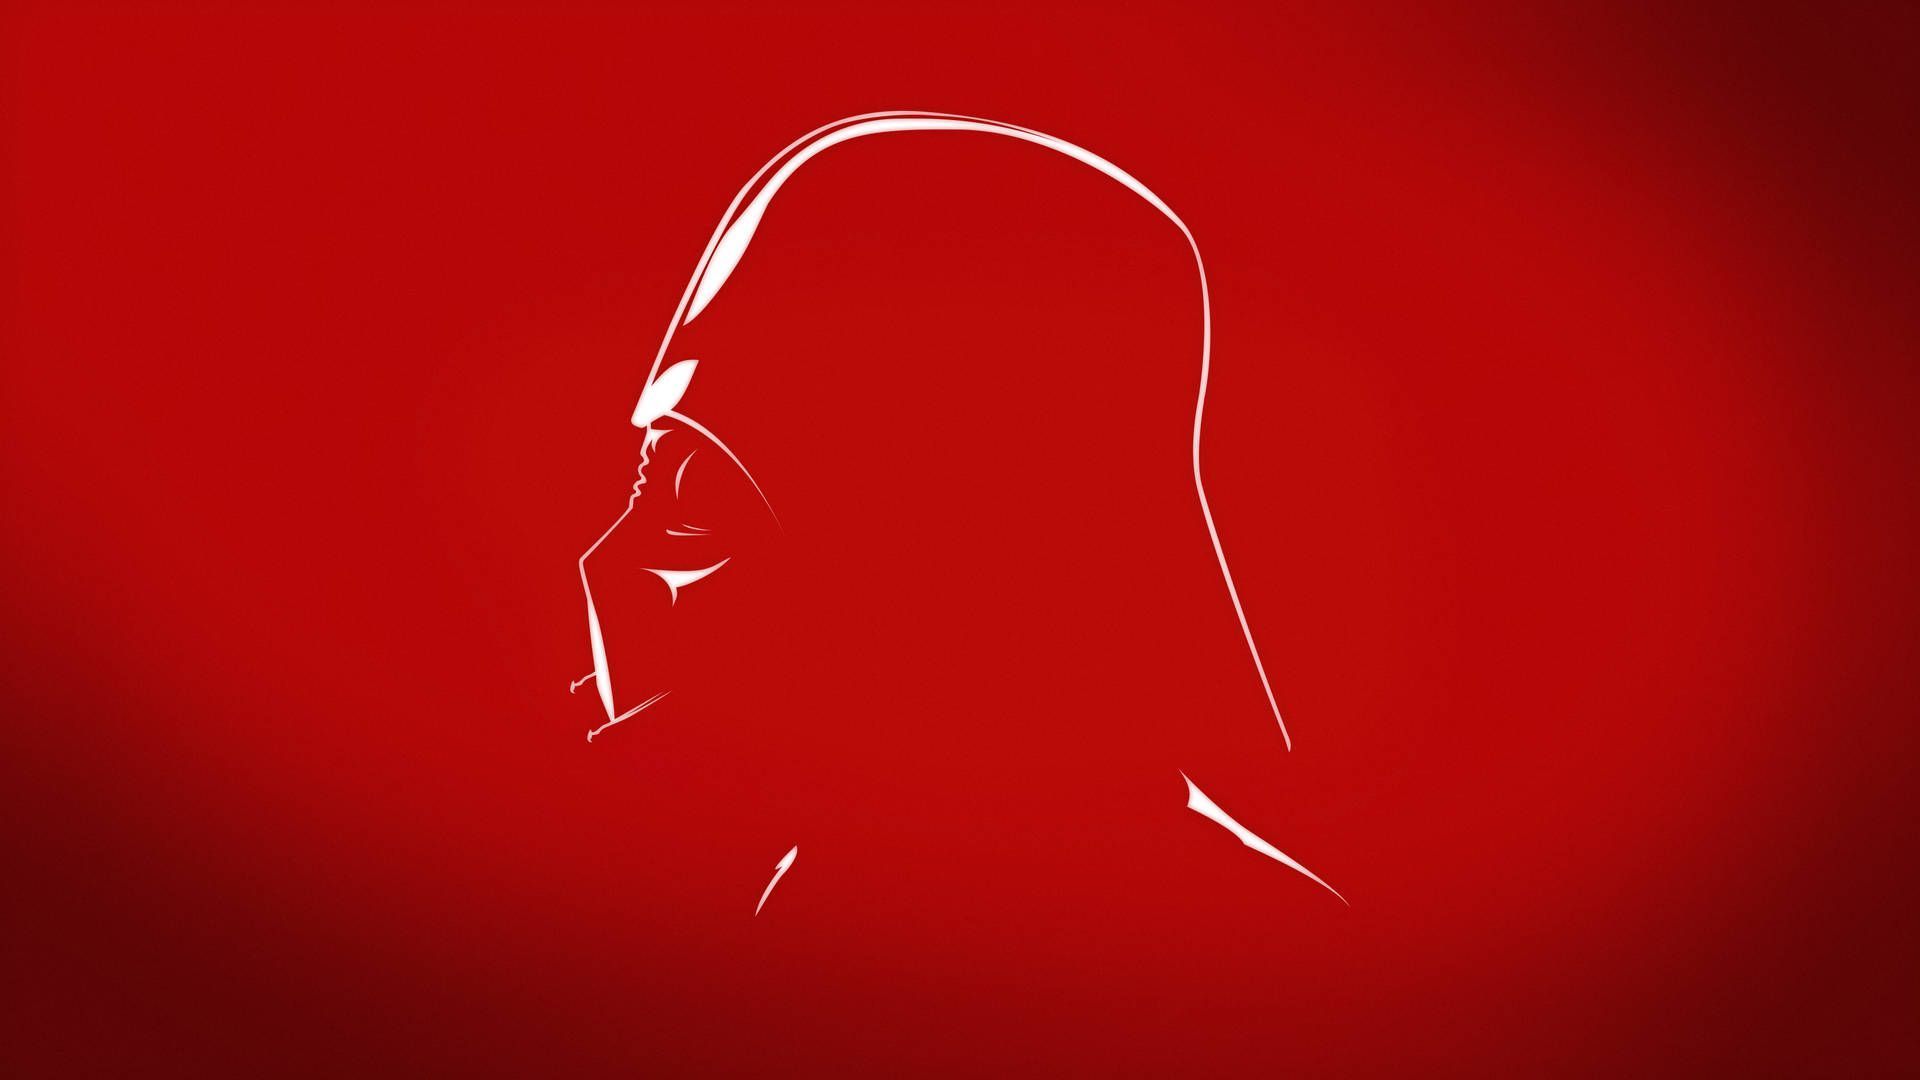 Download 4k Star Wars Red Aesthetic Vader Wallpaper